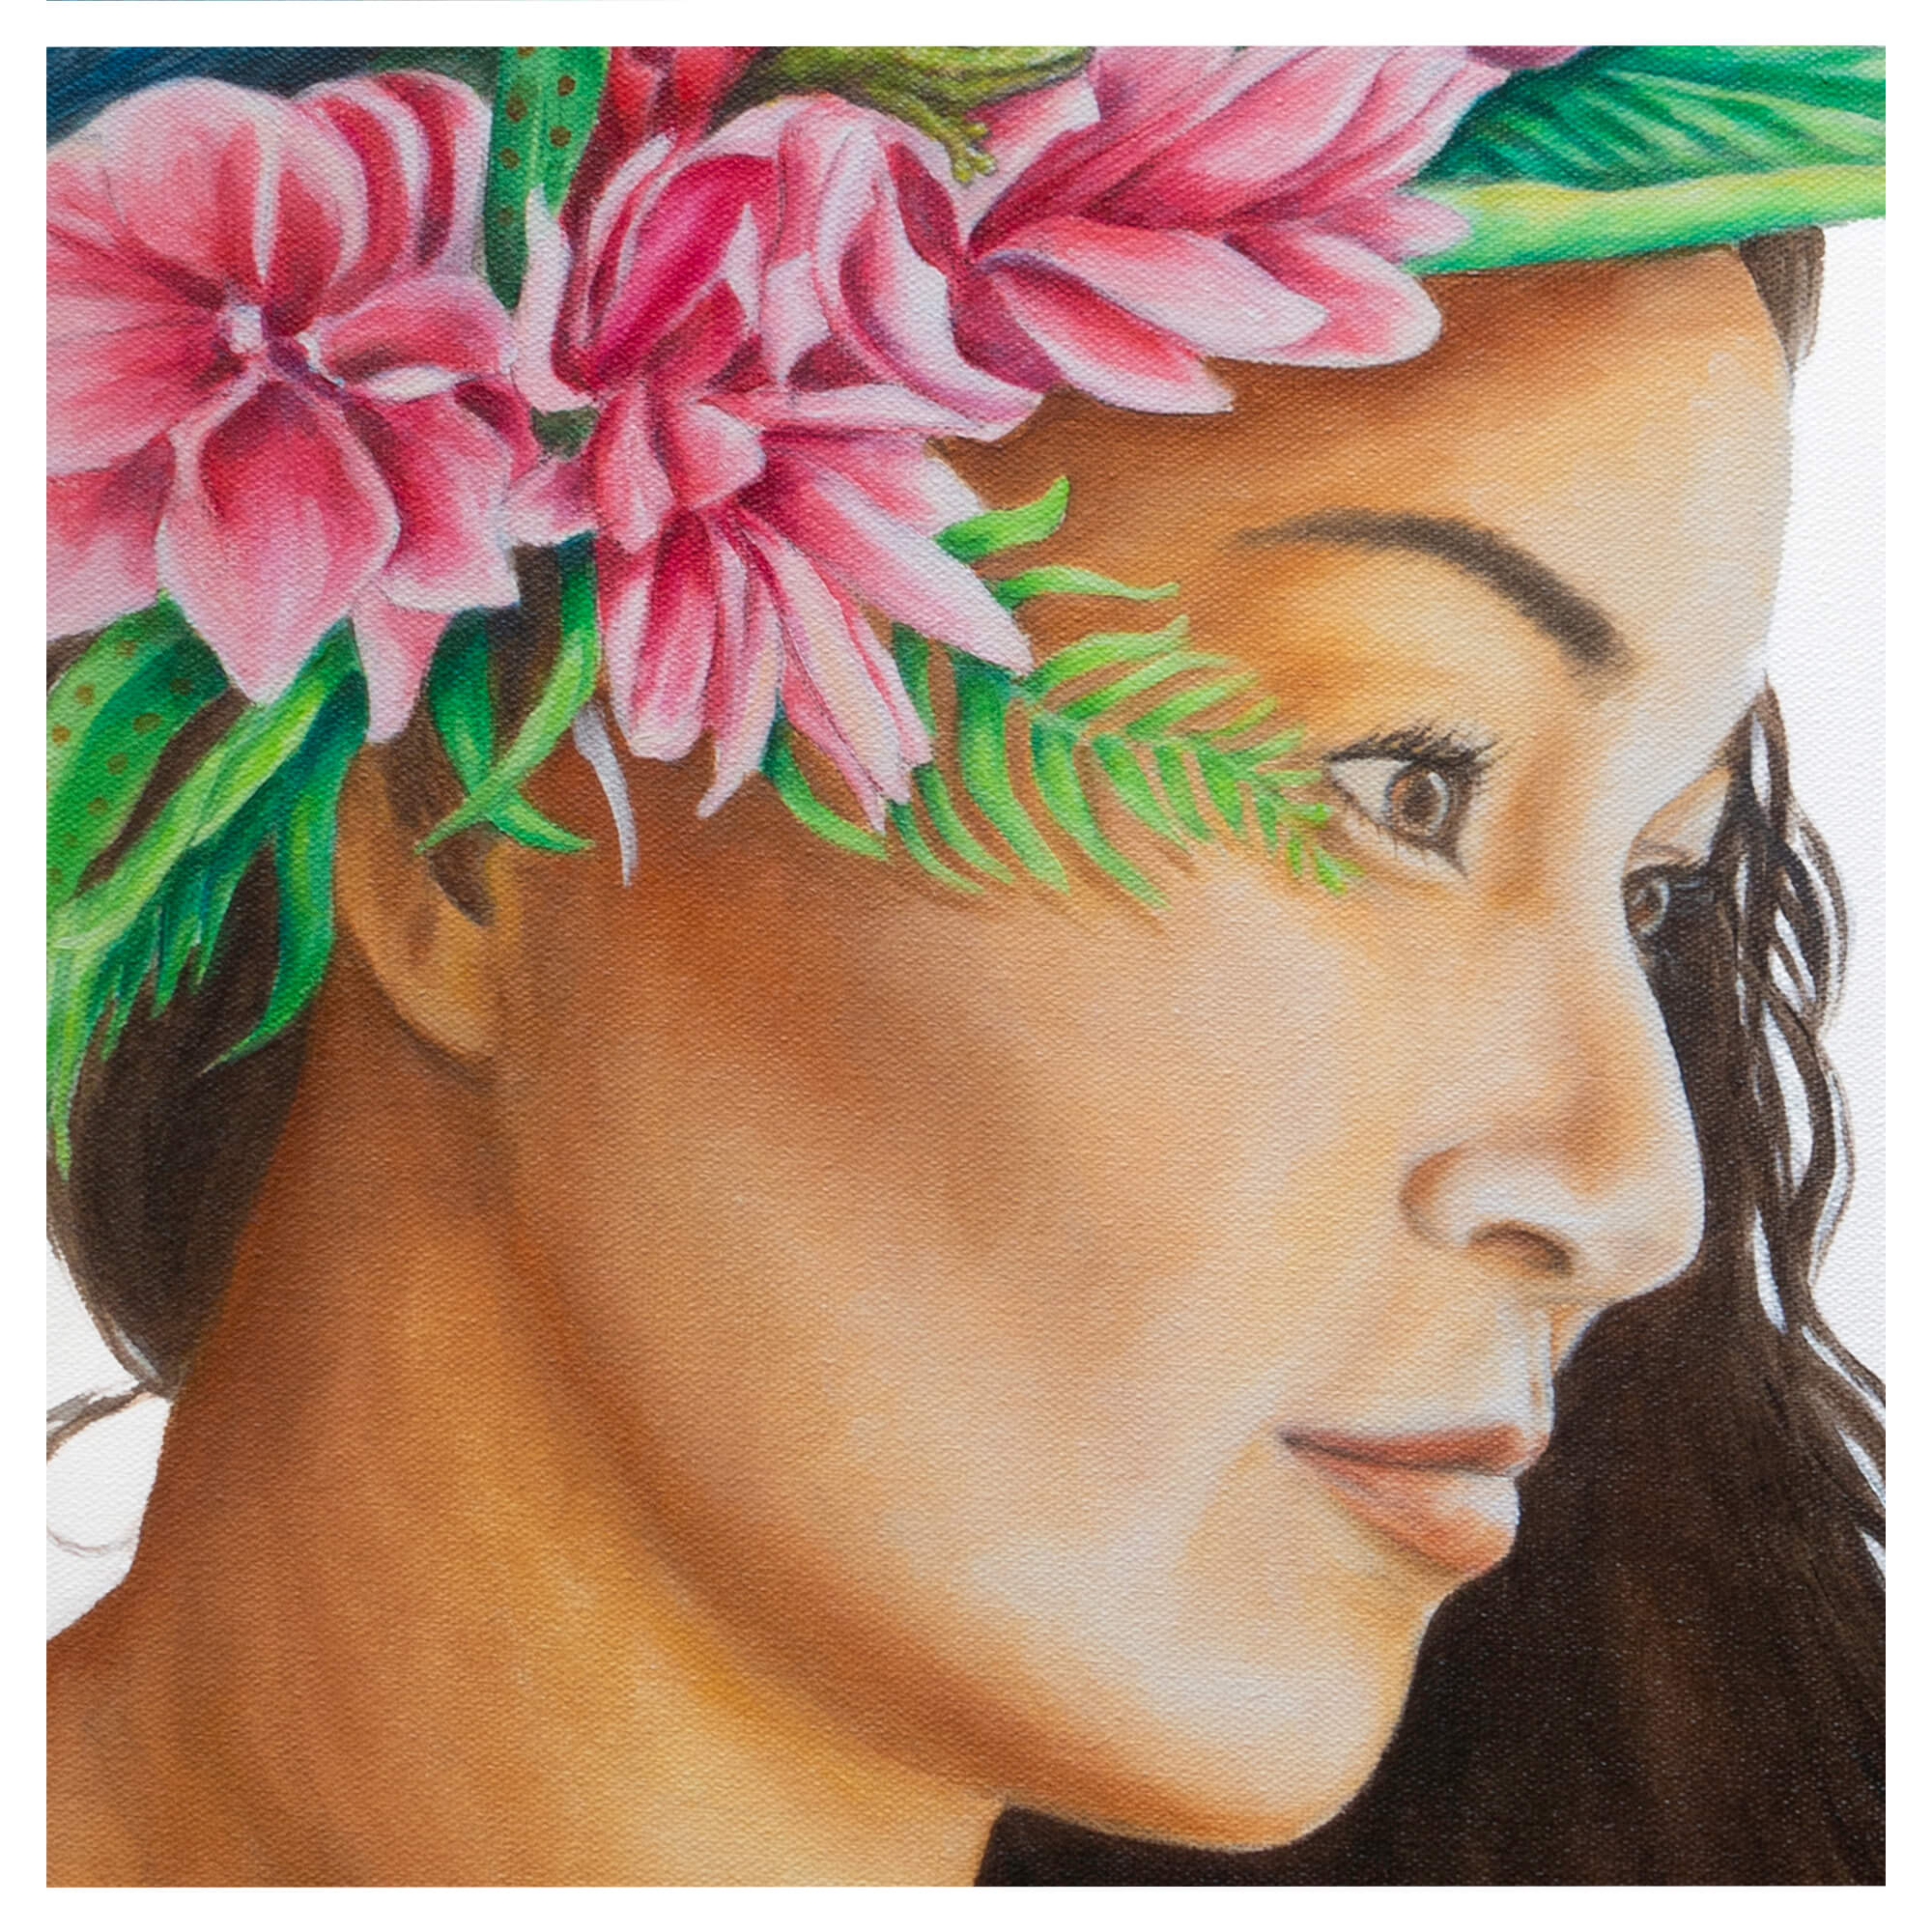 A woman wearing a lei with pink flowers  by hawaii artist Kelly Keane